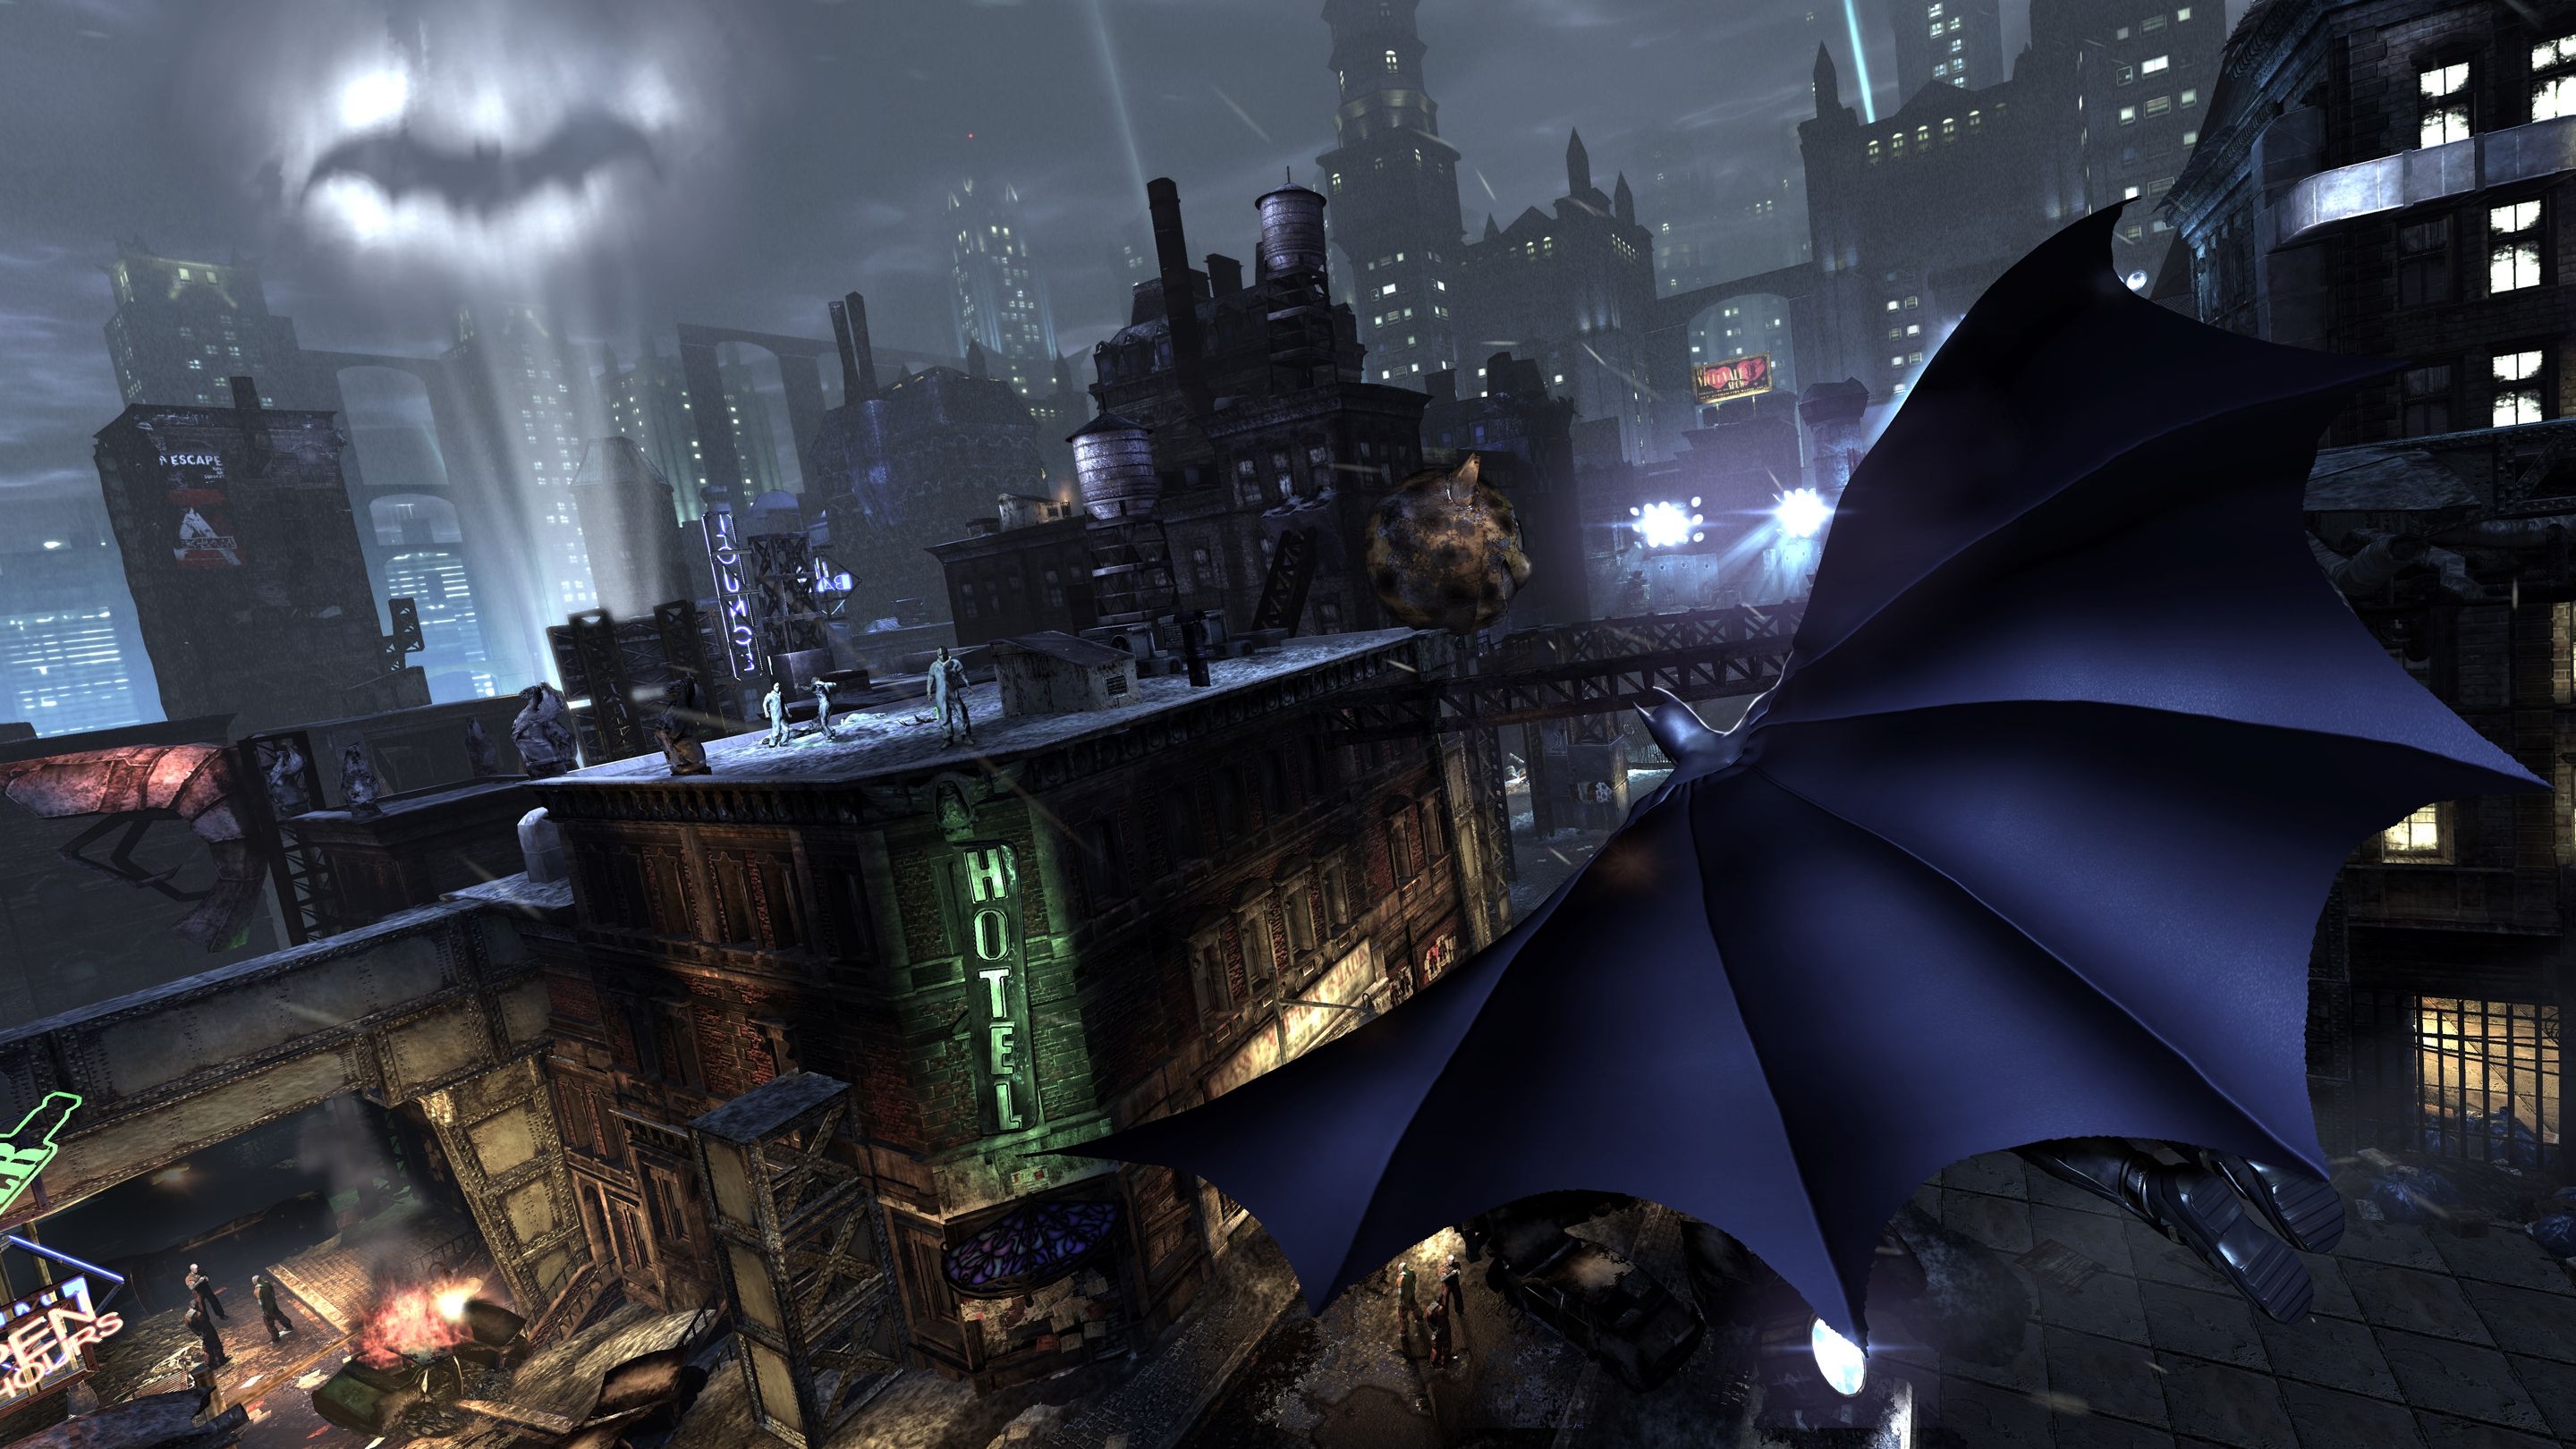 Télécharger des fonds d'écran Batman : Les Origines D'arkham HD